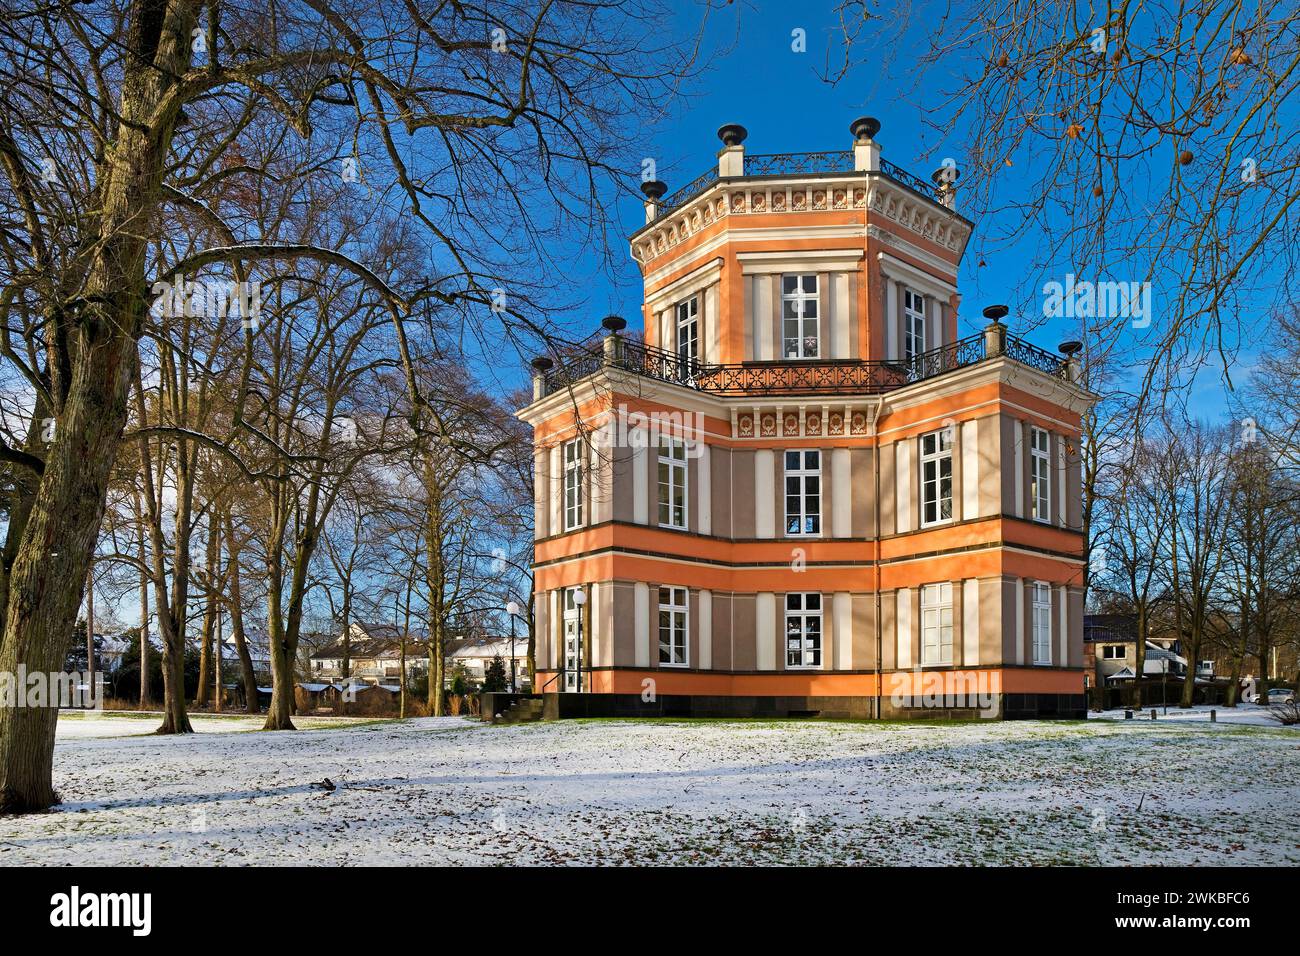 Greiffenhorst House in winter, Germany, North Rhine-Westphalia, Lower Rhine, Krefeld Stock Photo